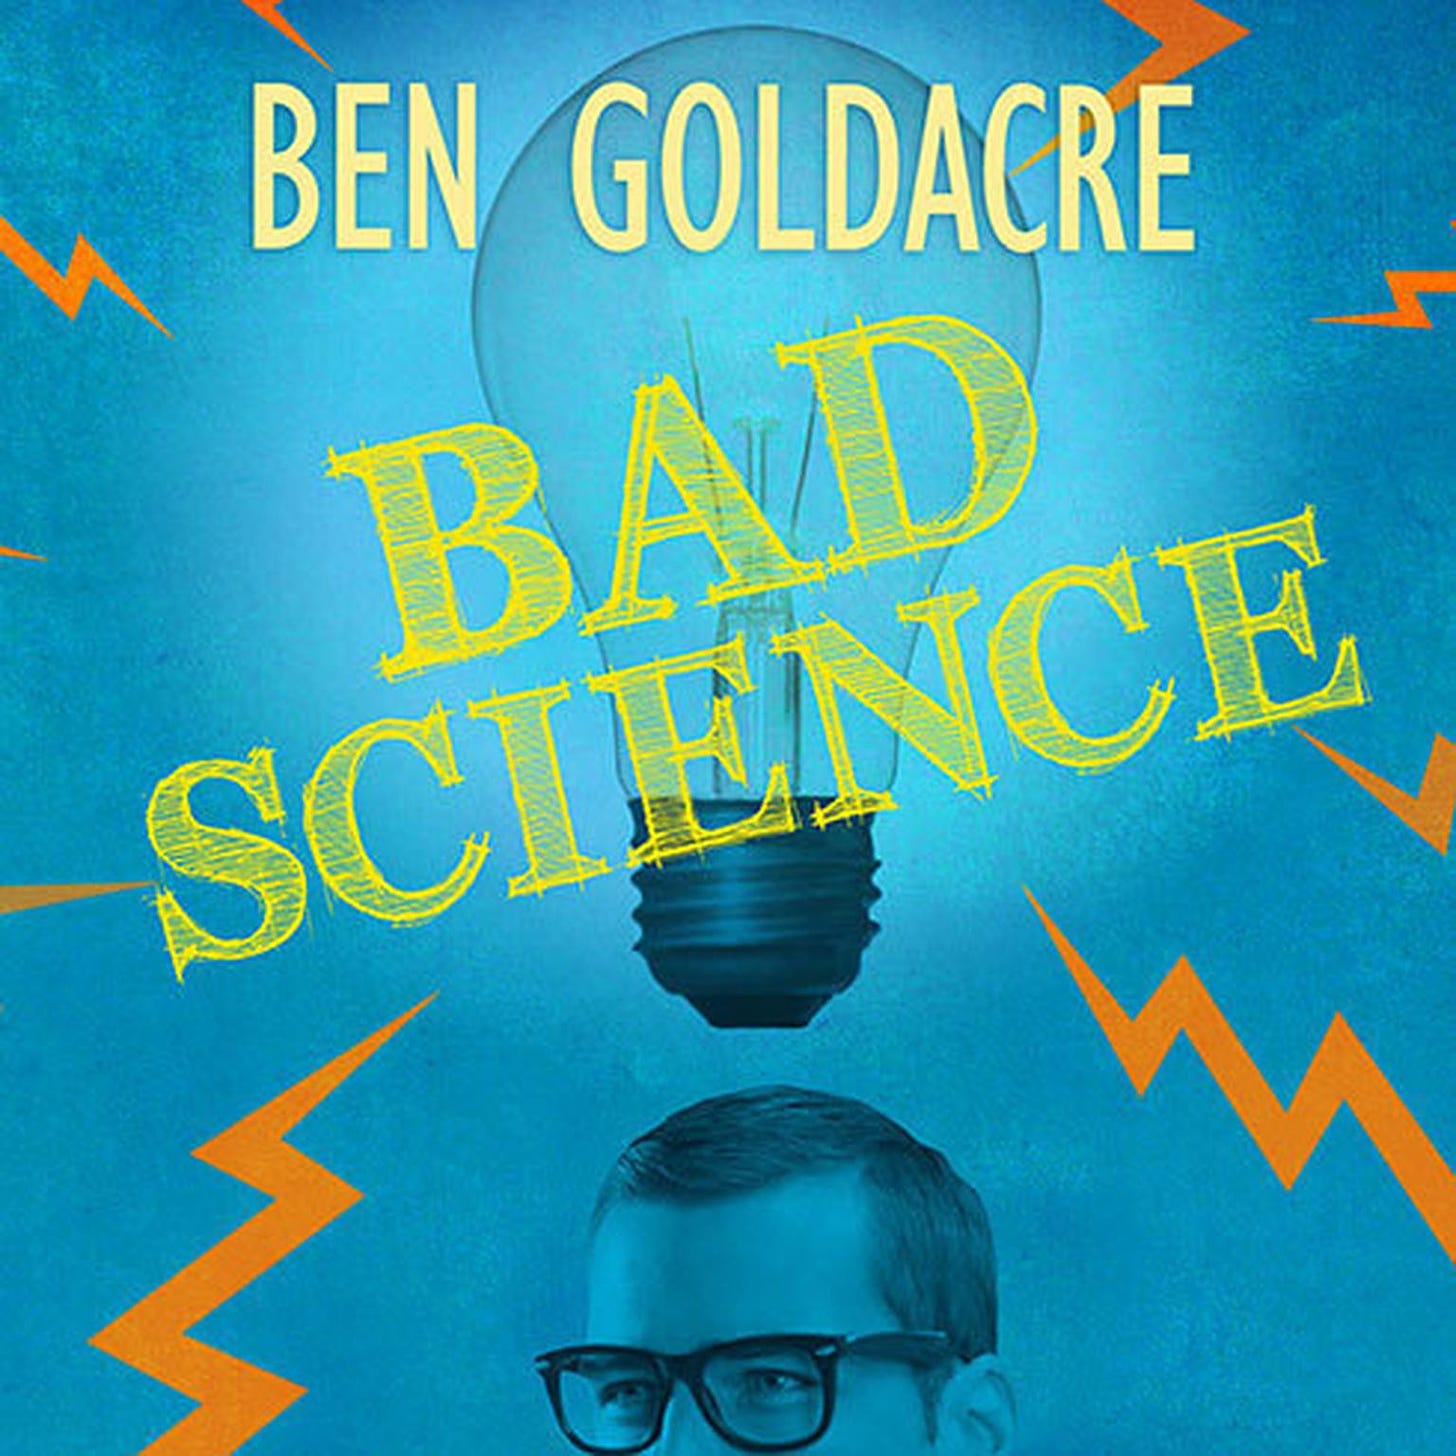 Bad Science - Audiobook | Listen Instantly!